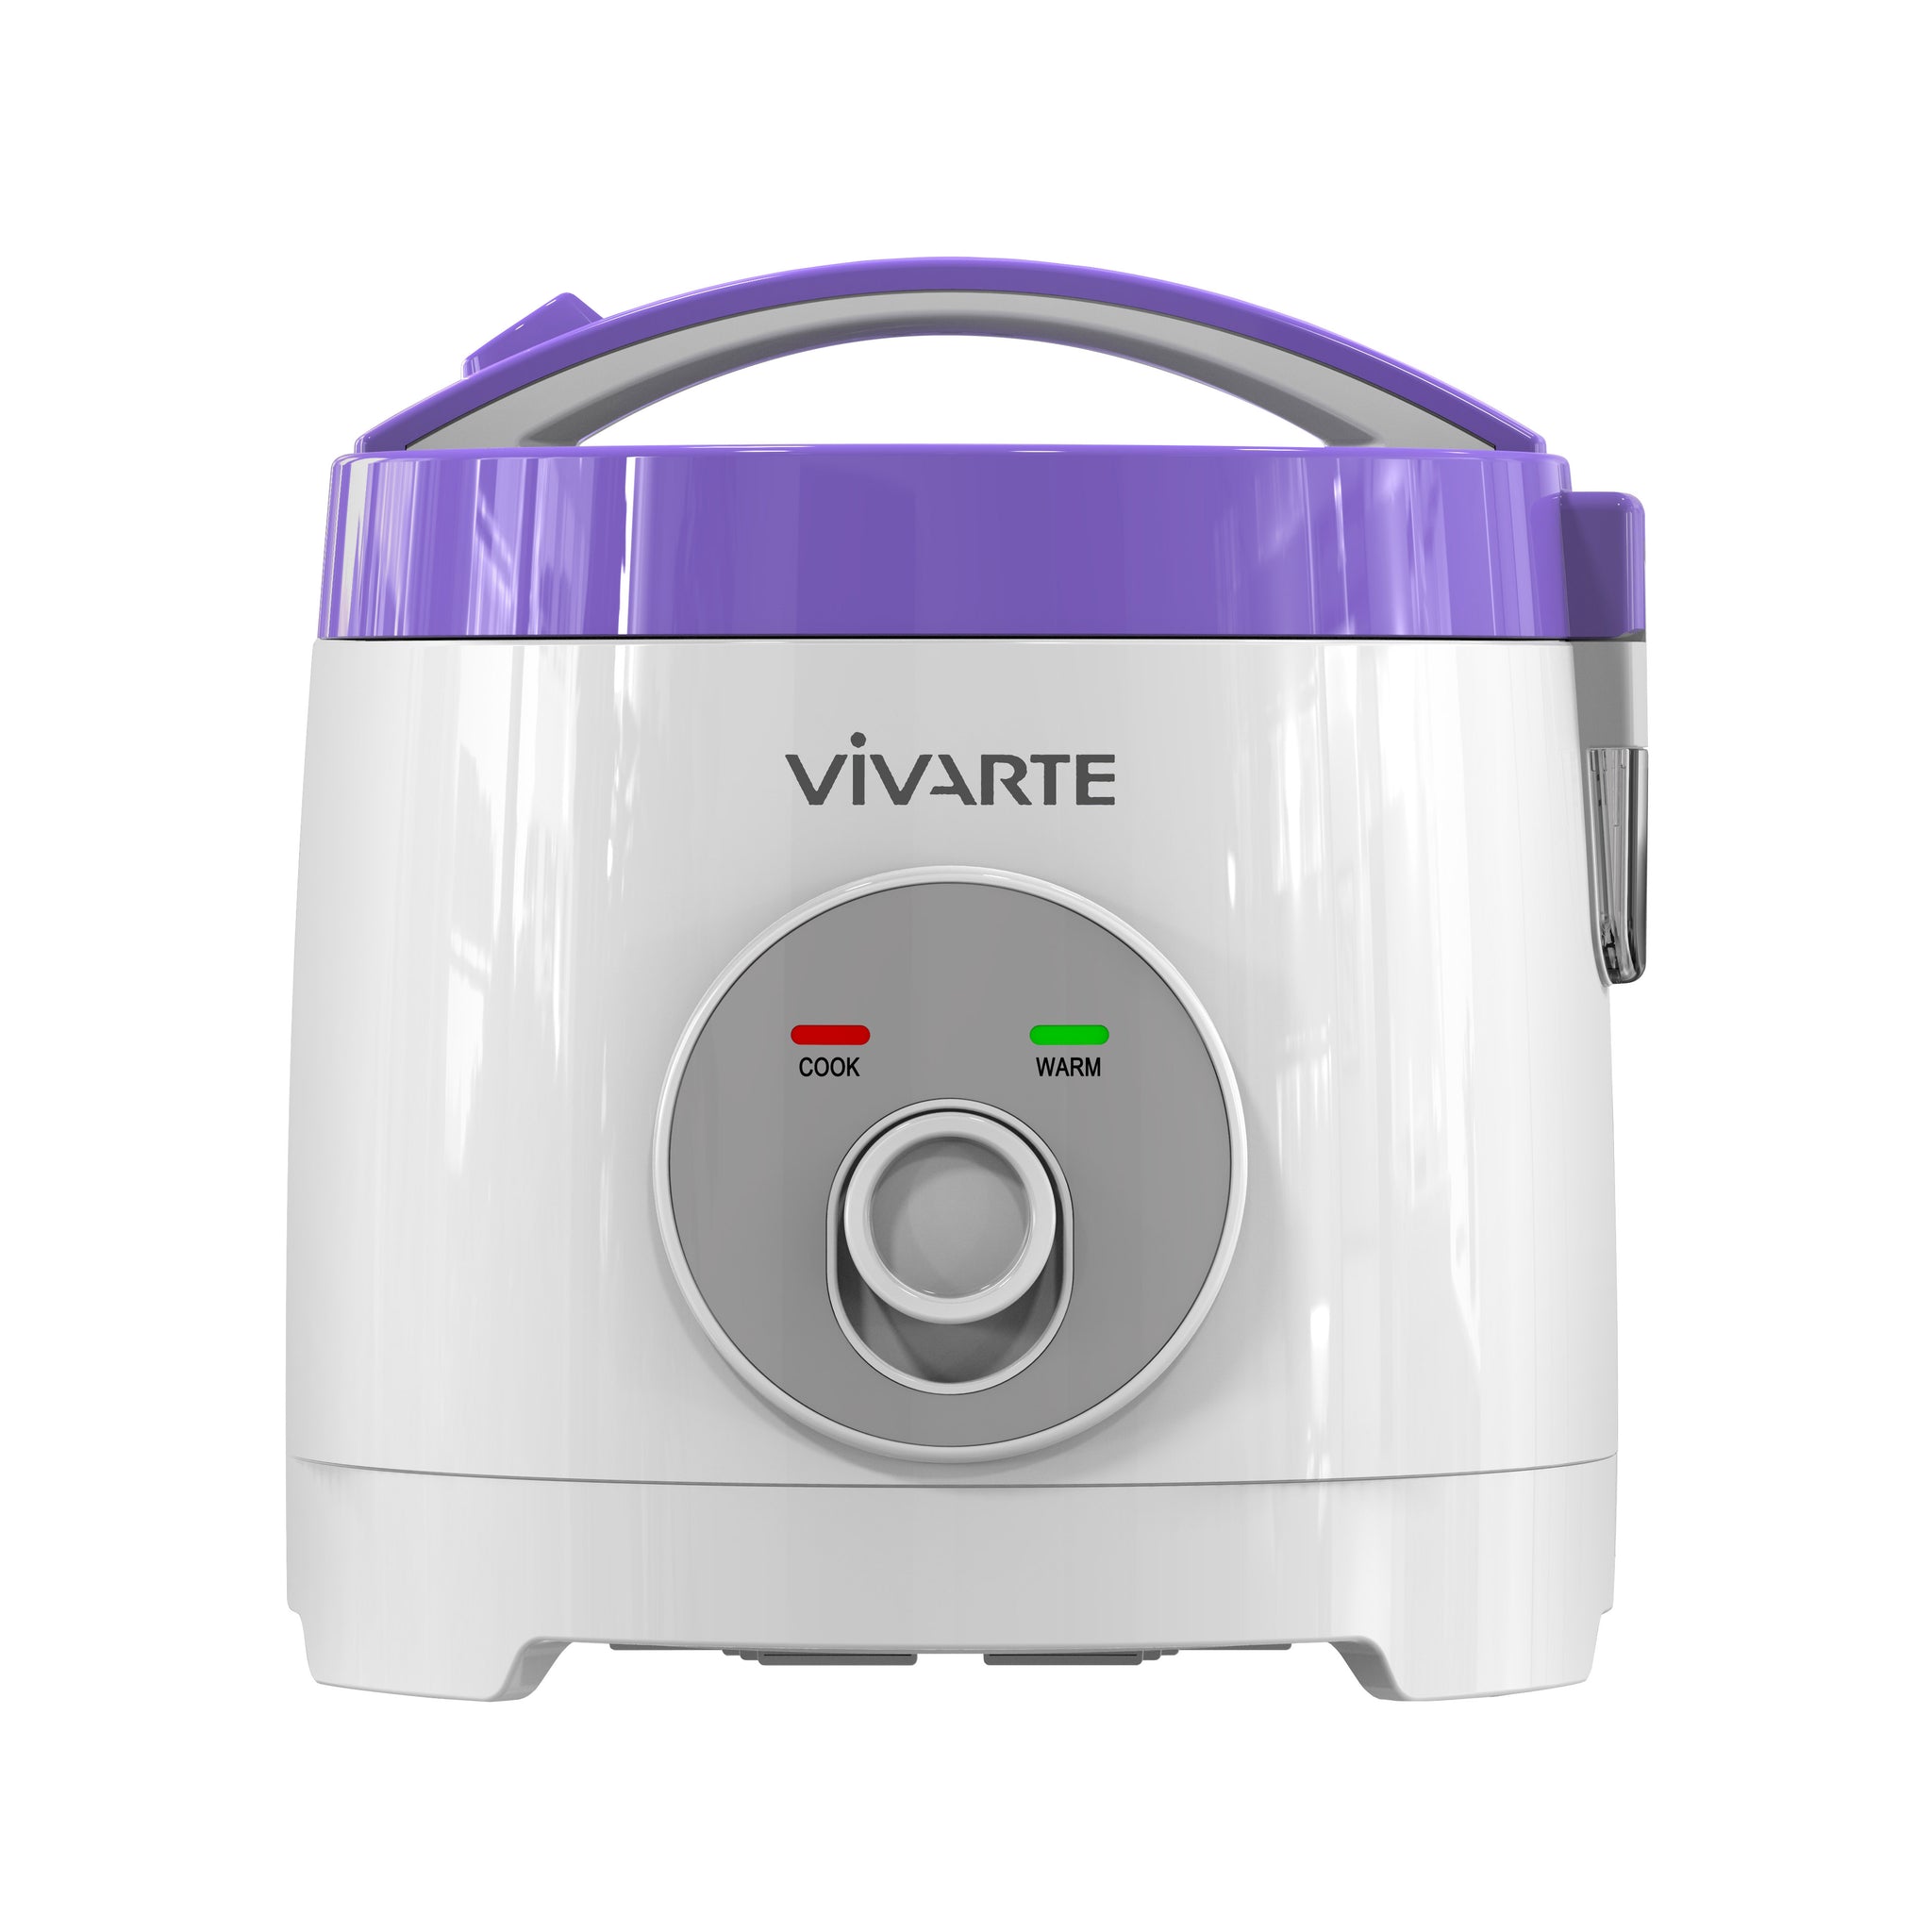 Vivarte Electric Rice Cooker (3 cups) - VR-003 by Vivarte